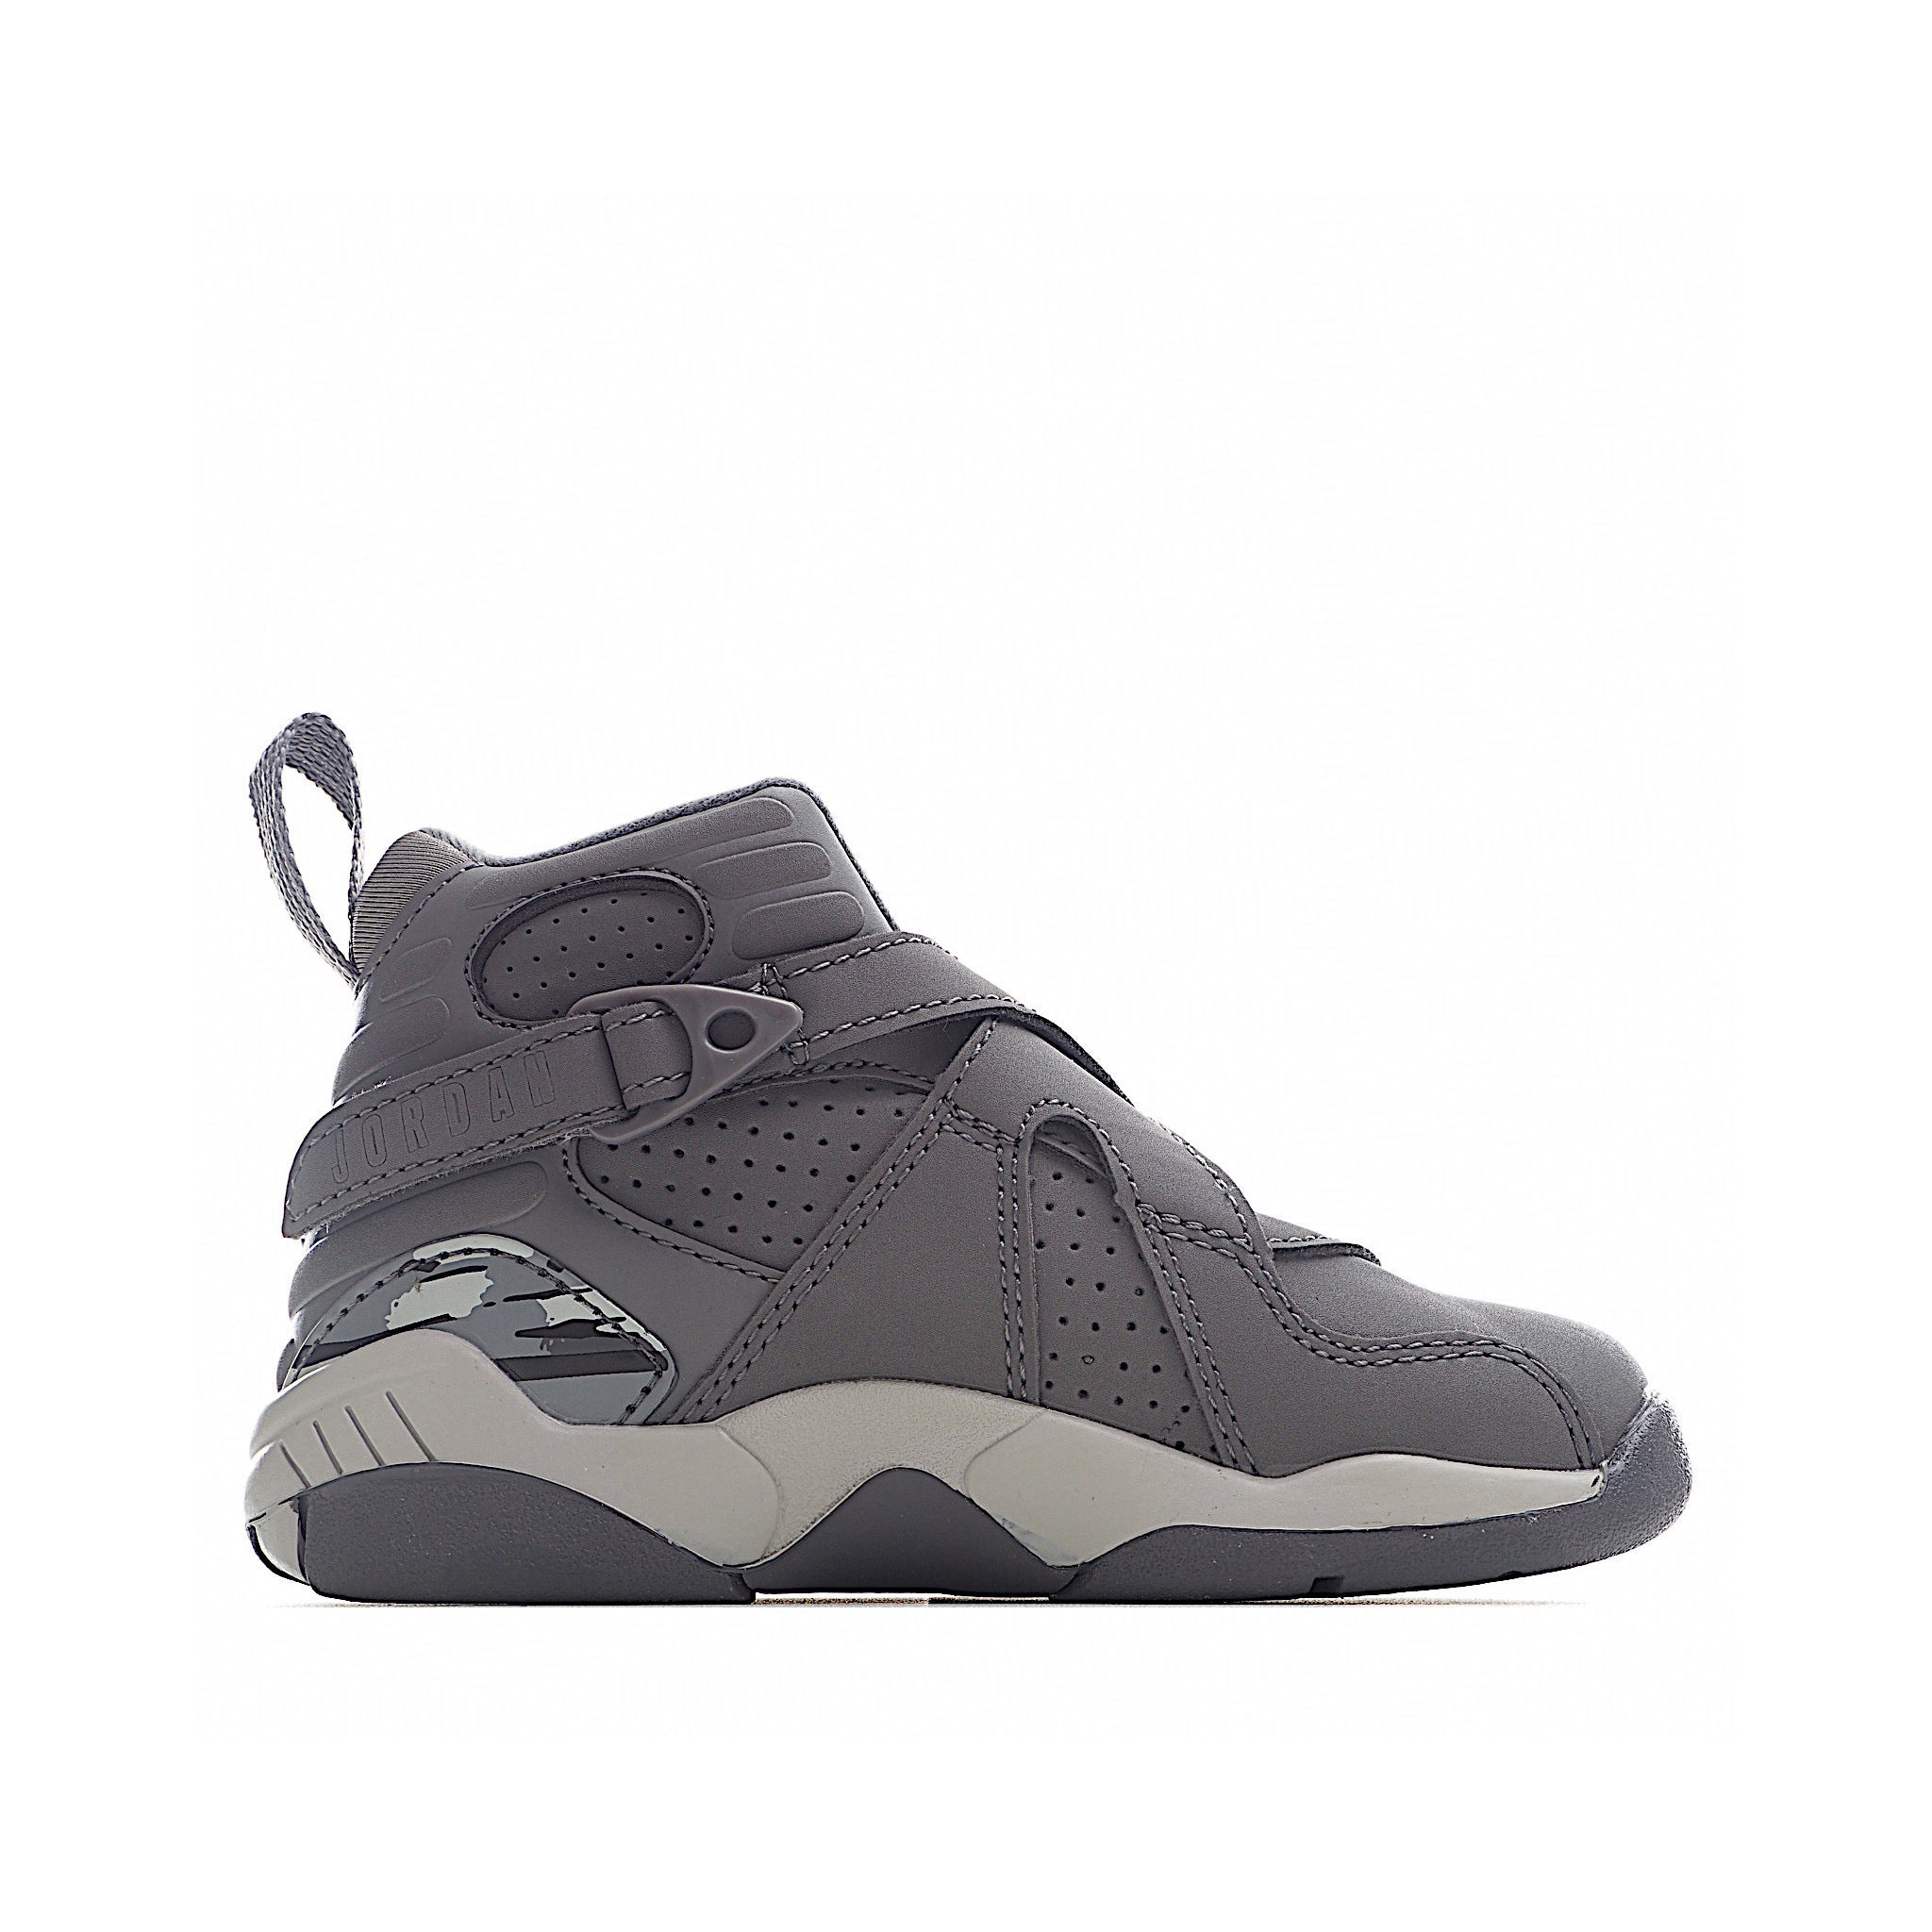 Nike air jordan 8 retro dark grey   shoes